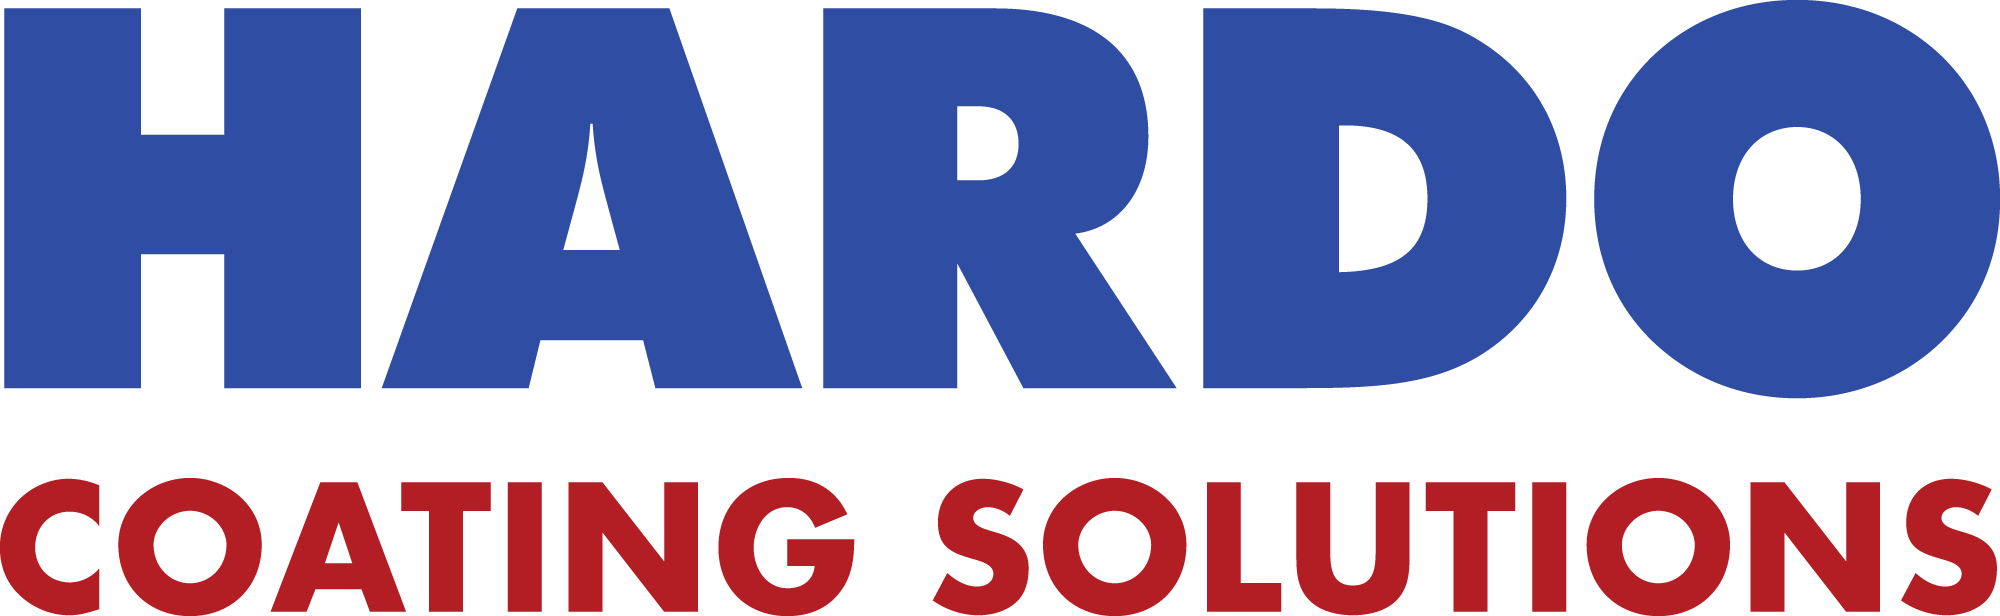 Logo HARDO coating solutions 09-19